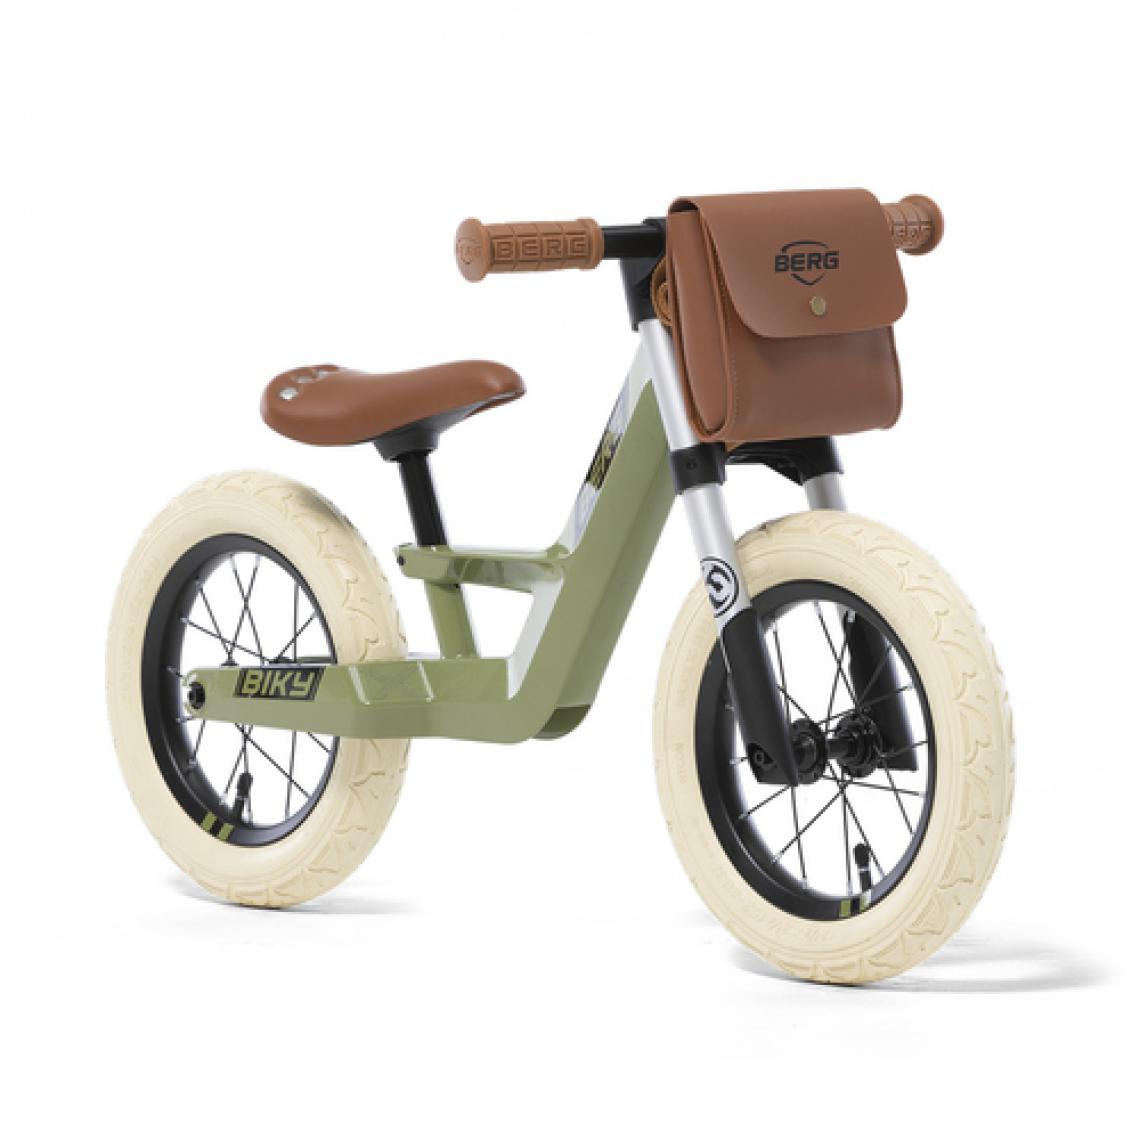 Berg - BERG Vélo déquilibre Biky Retro vert - Tricycle